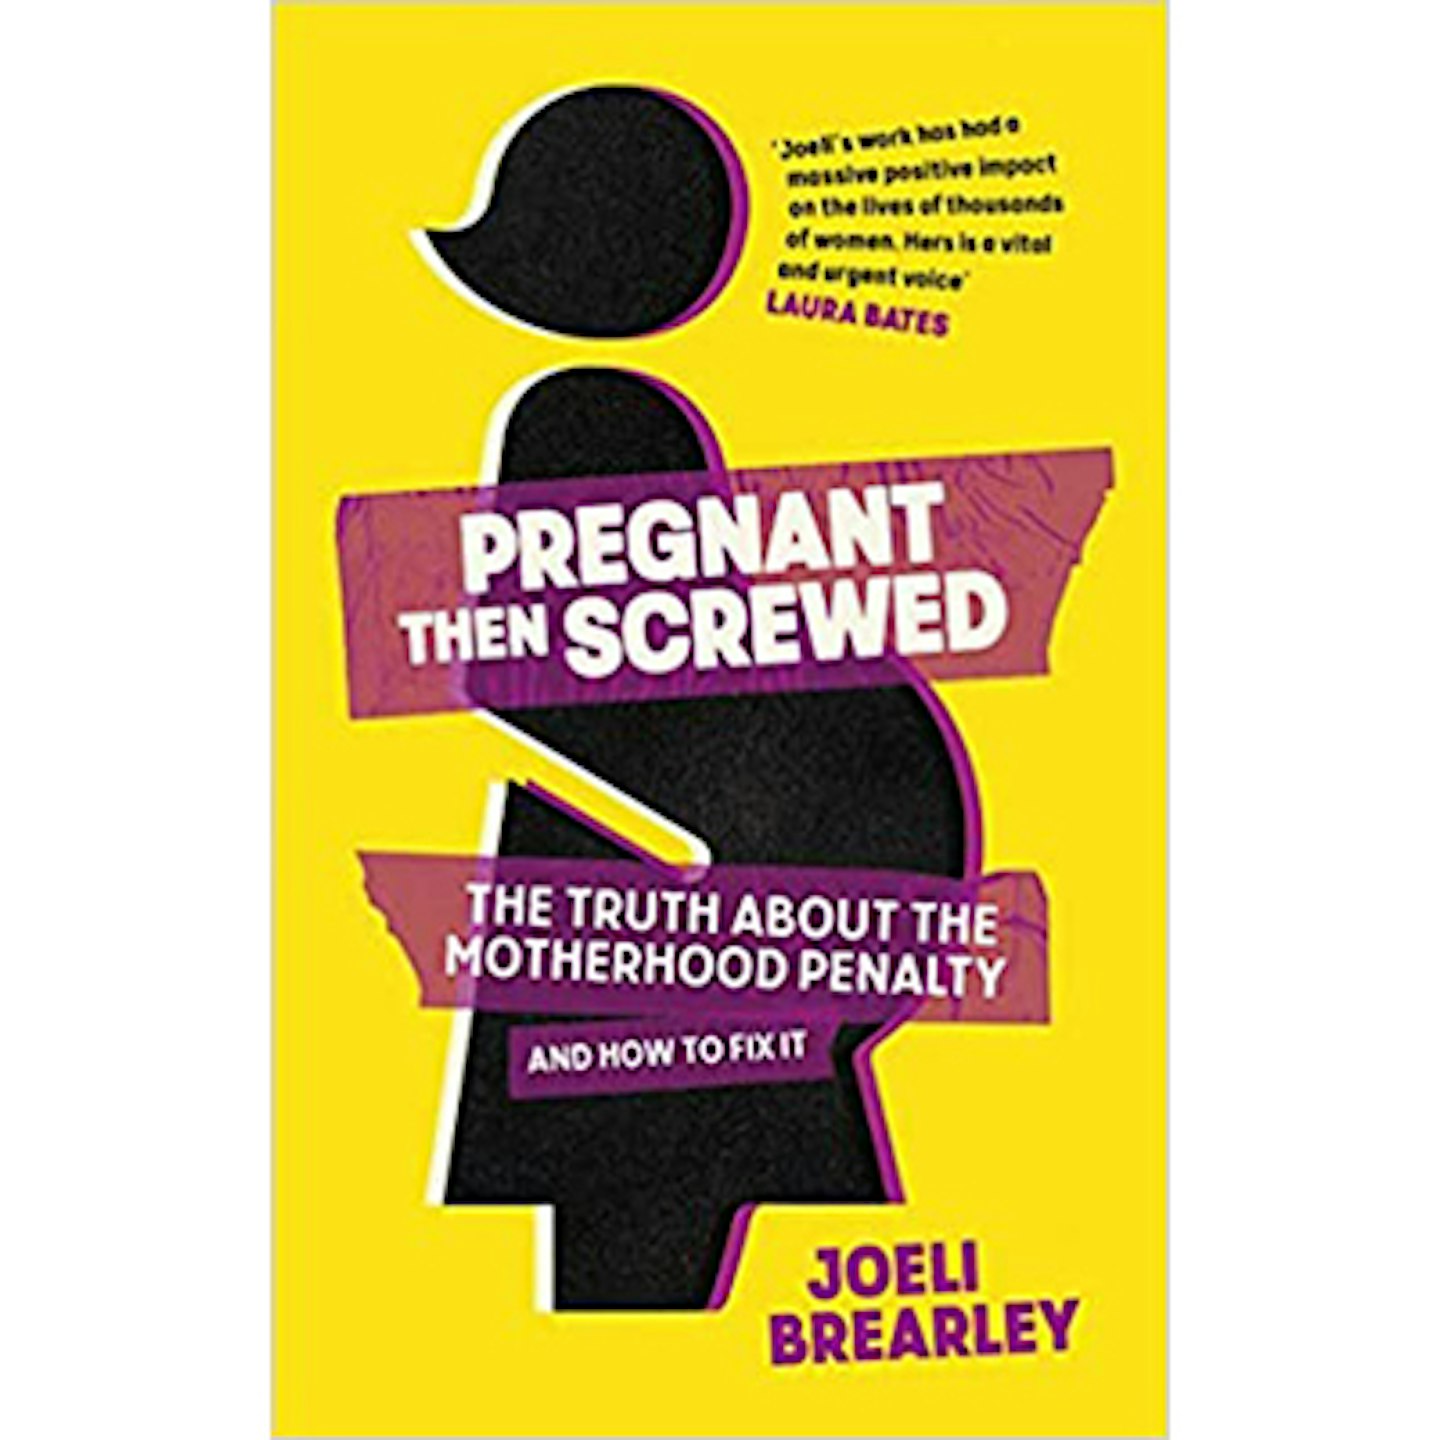 Pregnant Then Screwed by Joeli Brearley 